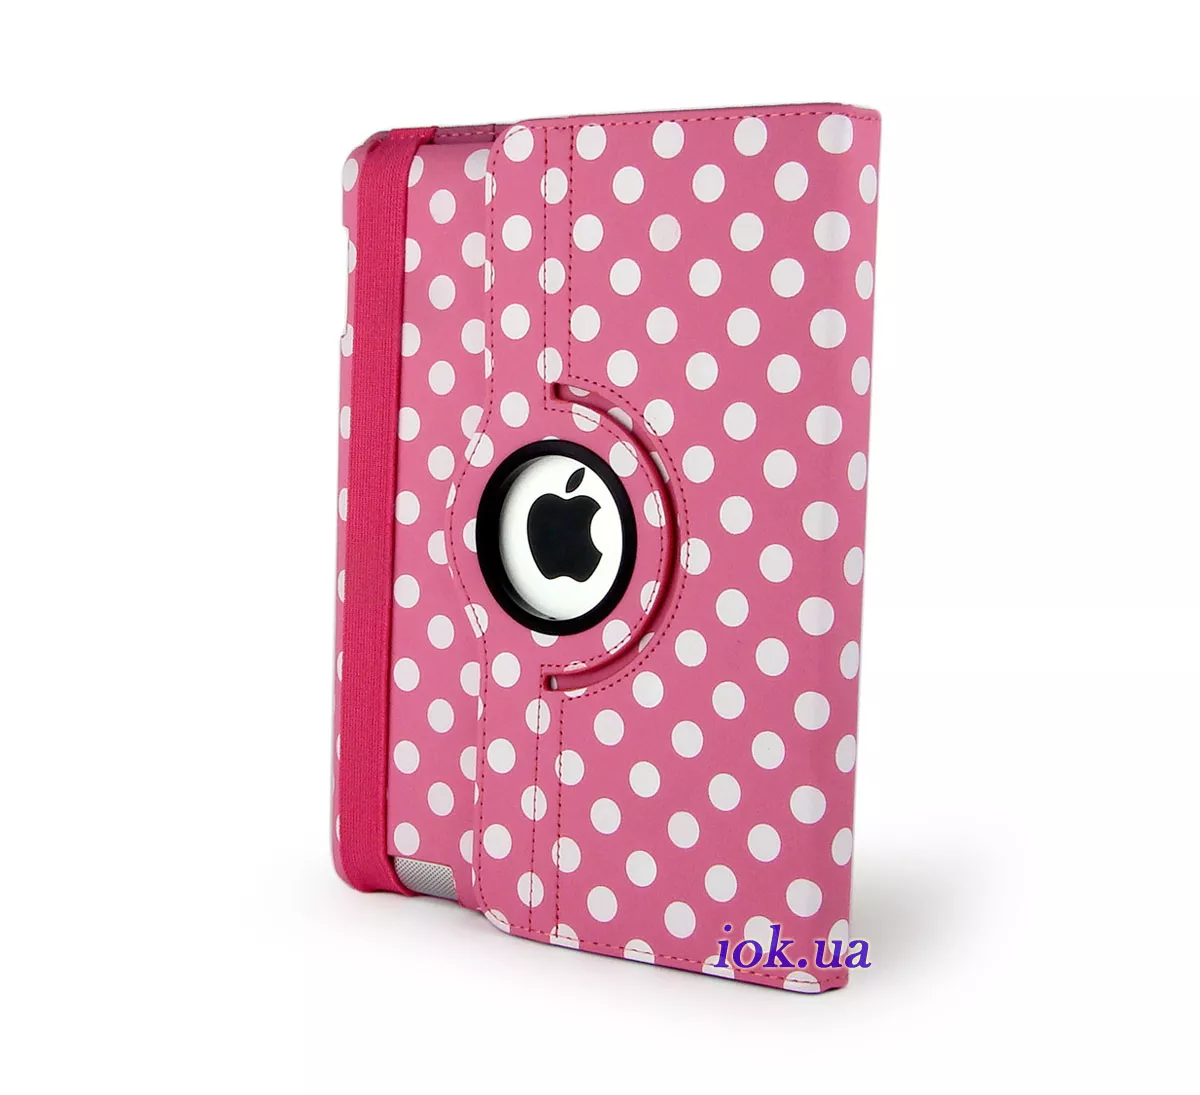 Чехол Cath Kidston в горошек для iPad 2/3/4 - розовый